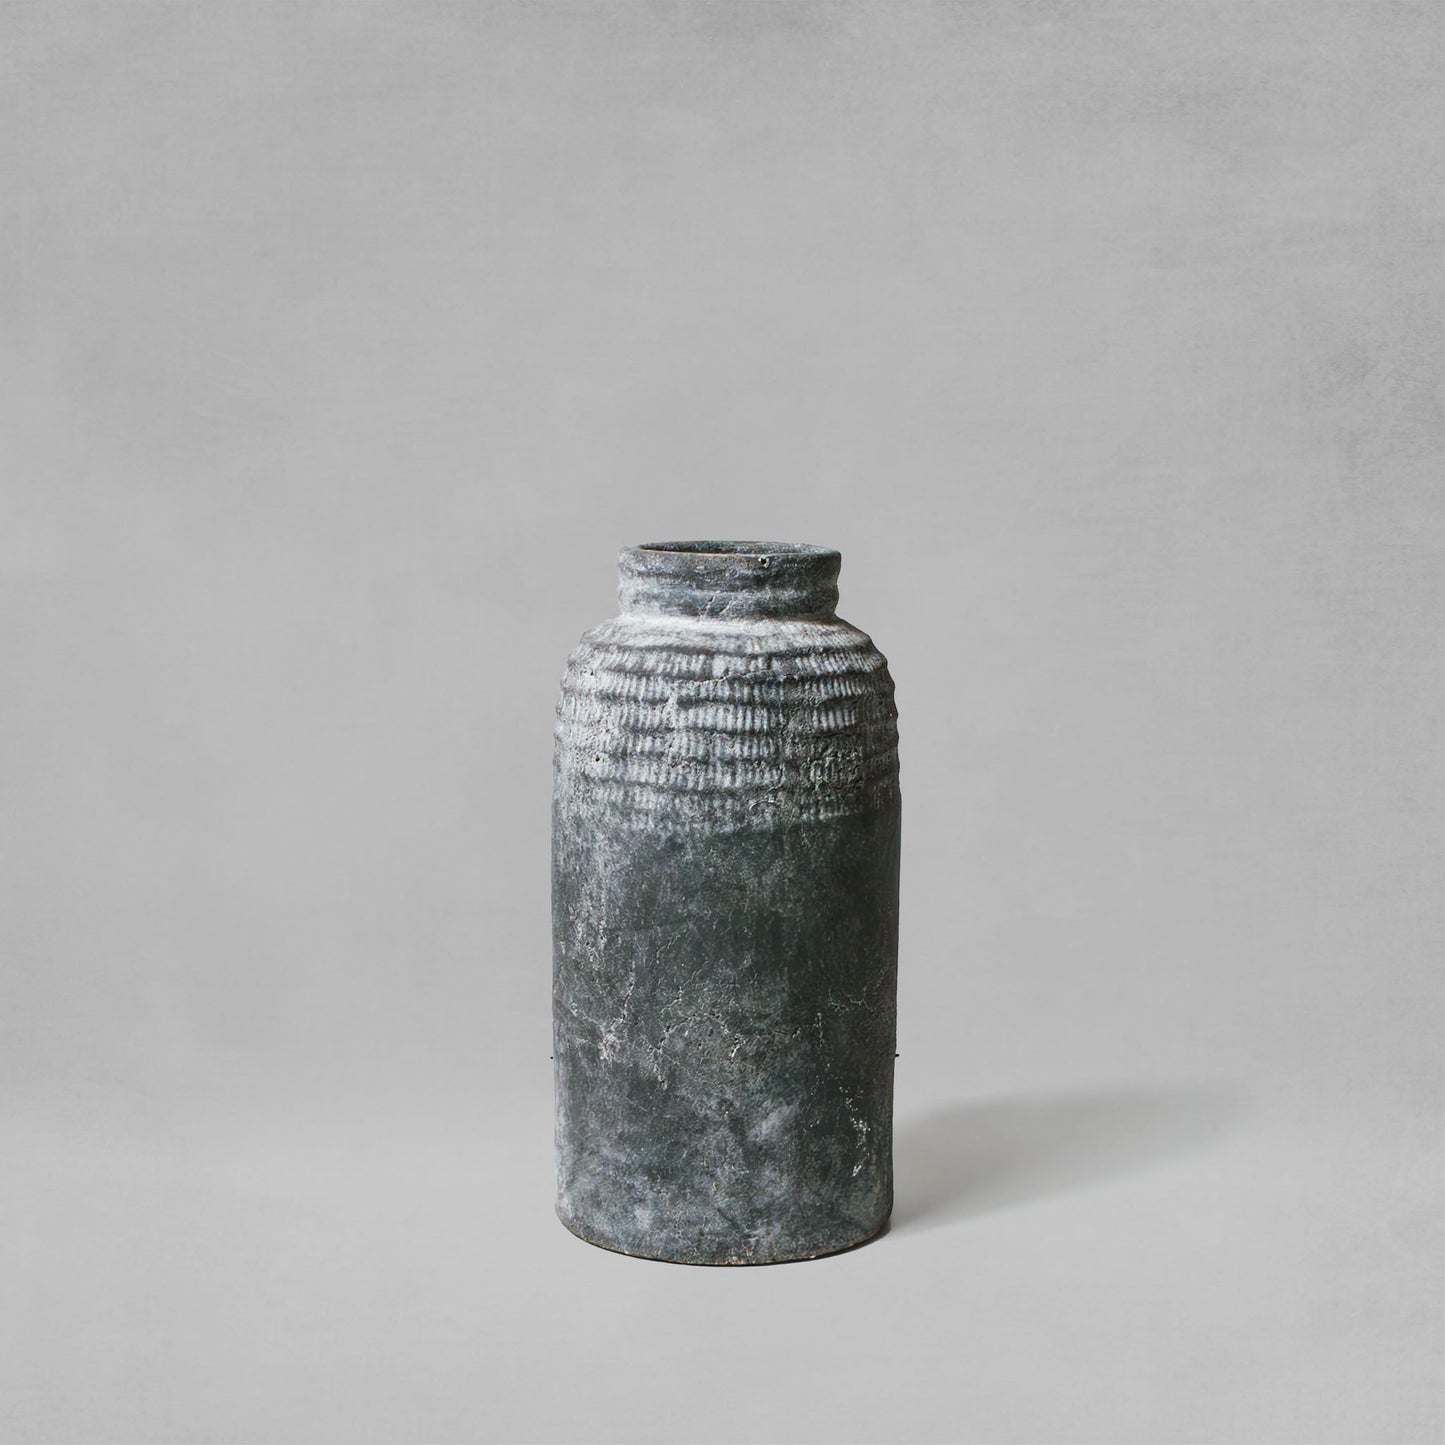 Medium artisanal weathered gray earthenware vase with gray background.